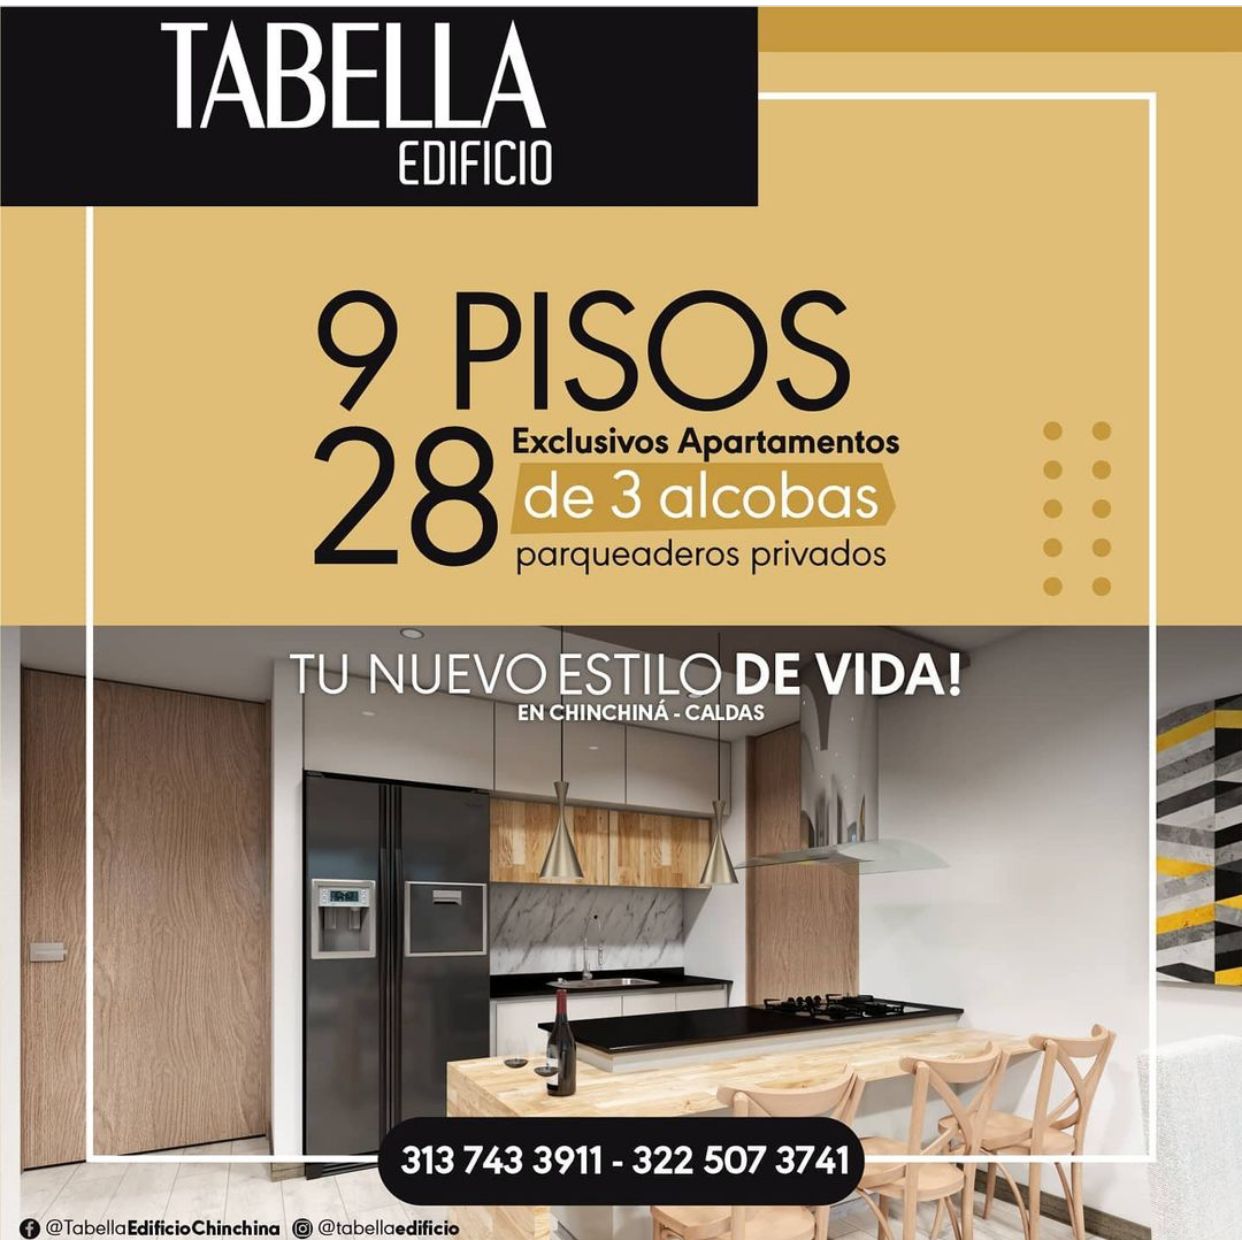 PV-0049 Edificio Tabella, tu nuevo estilo de vida.